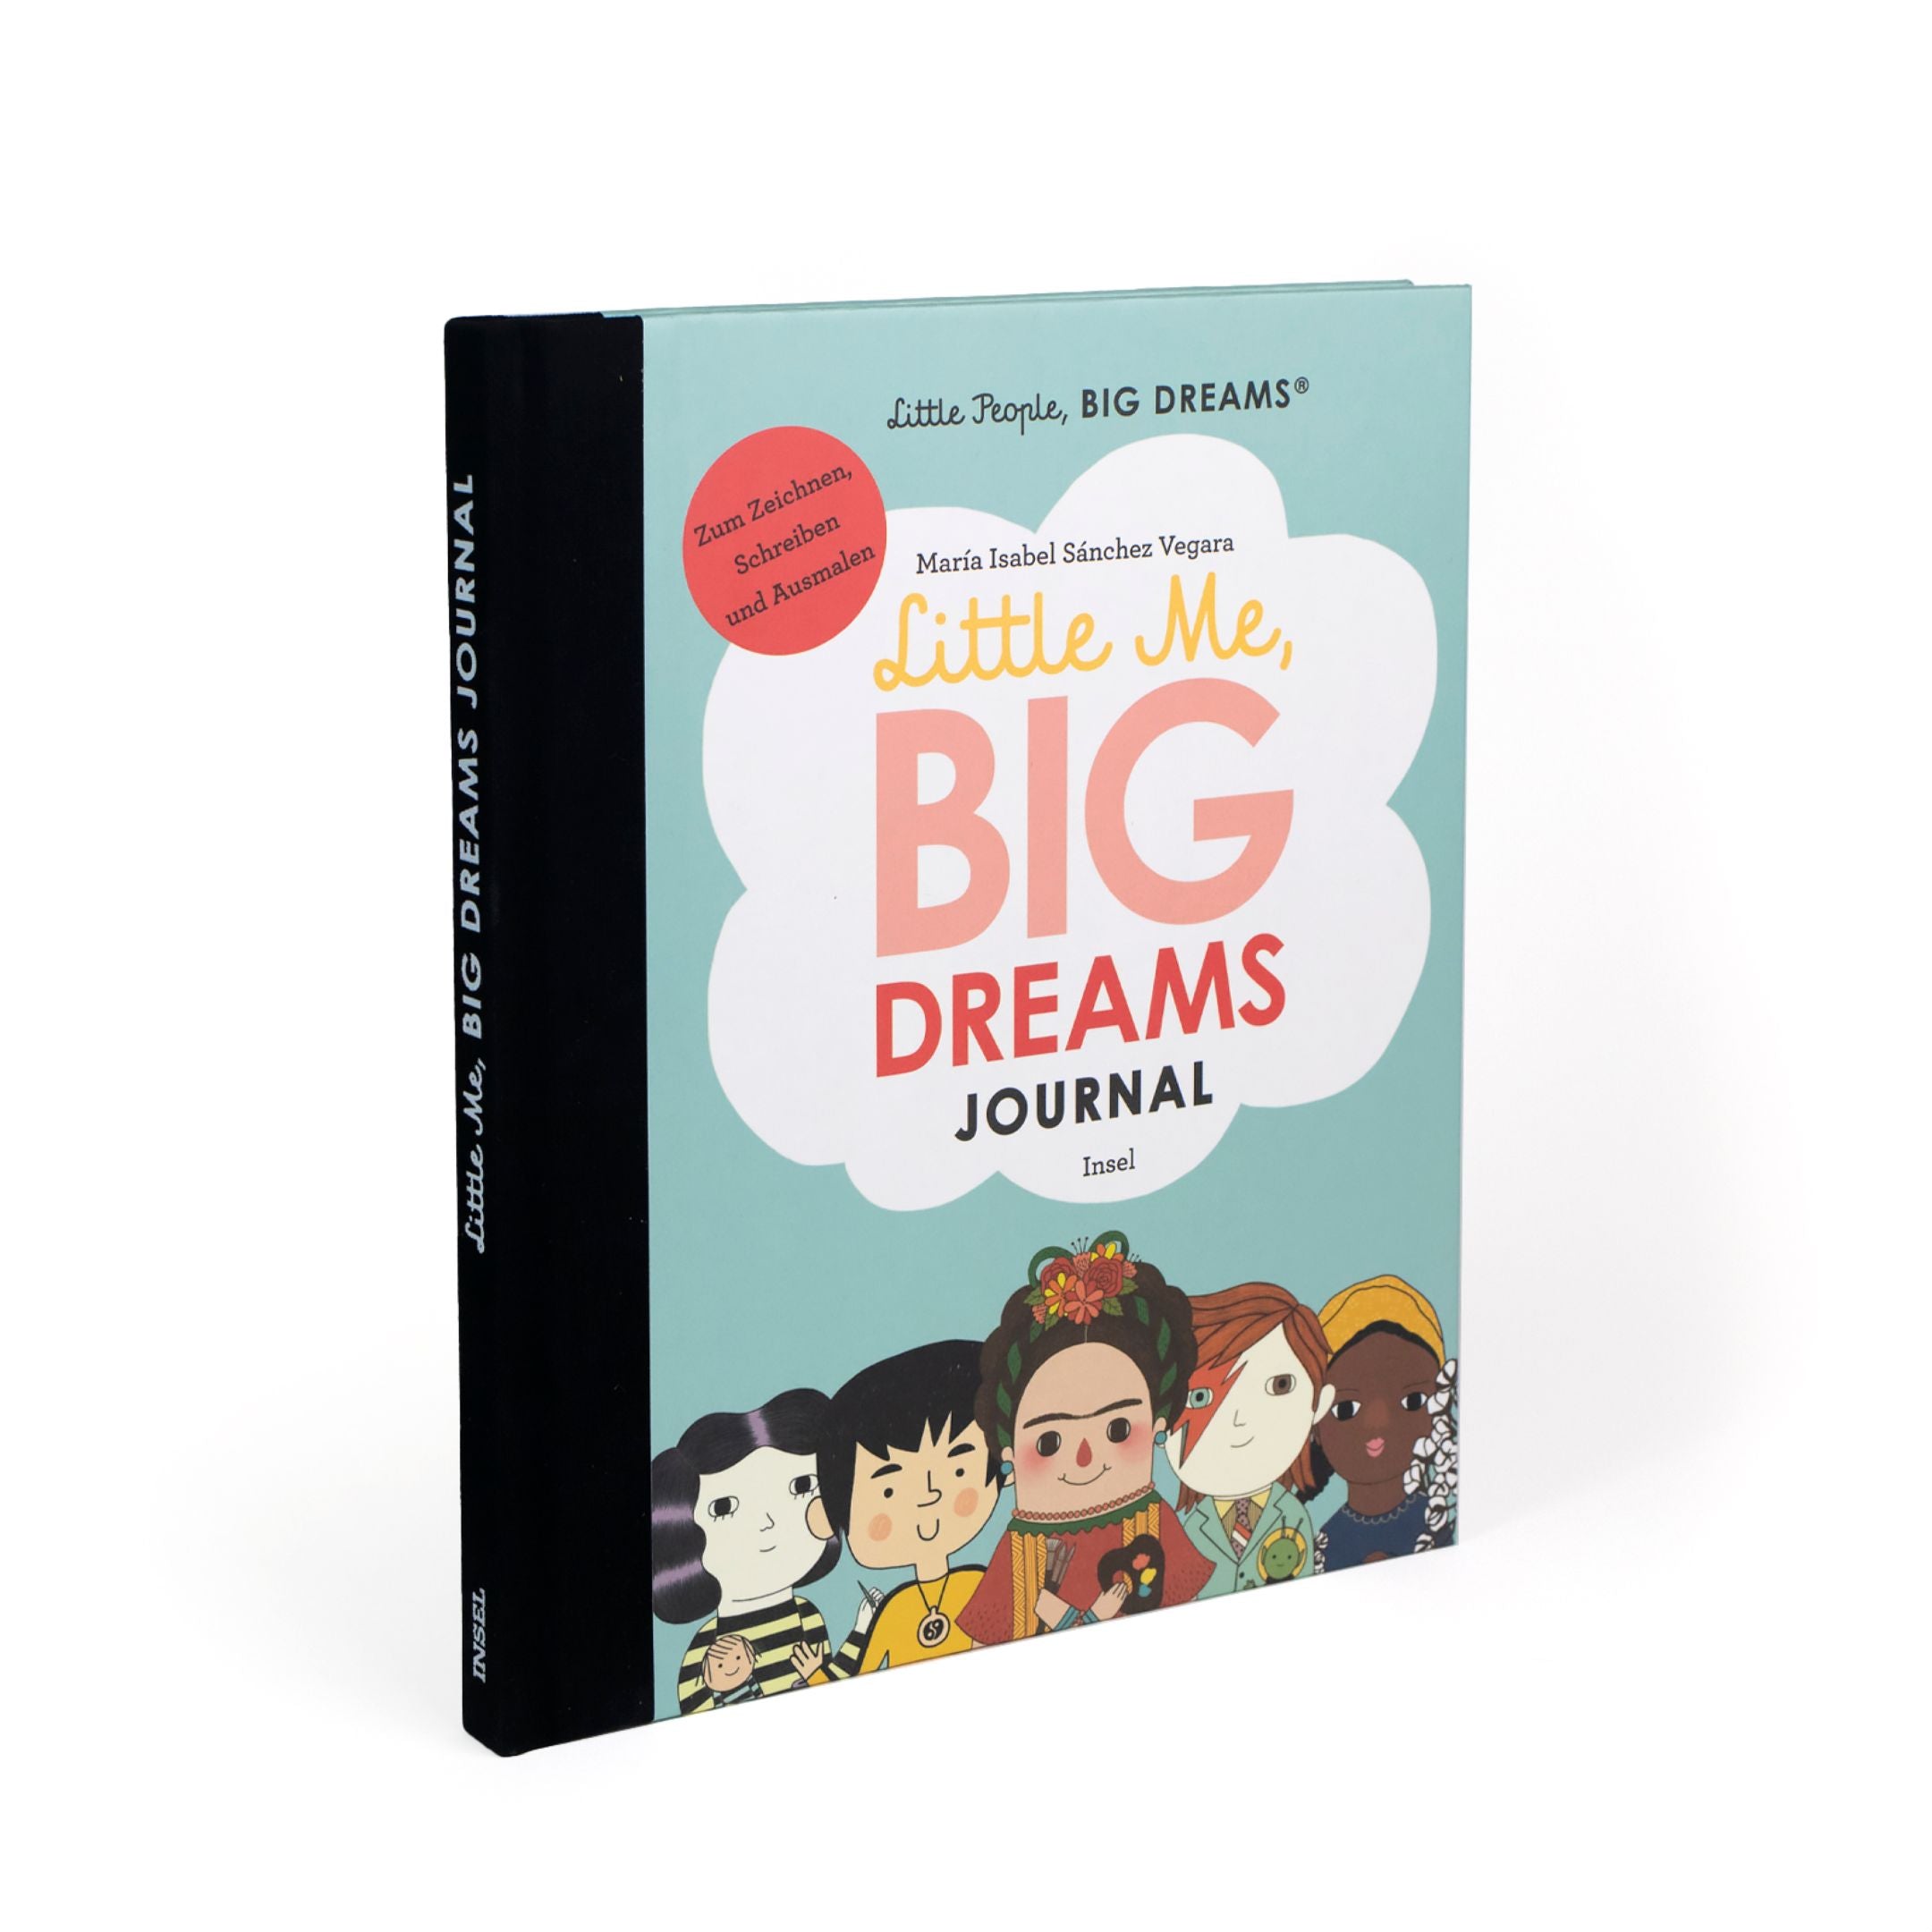 Little People, Big Dreams: Journal